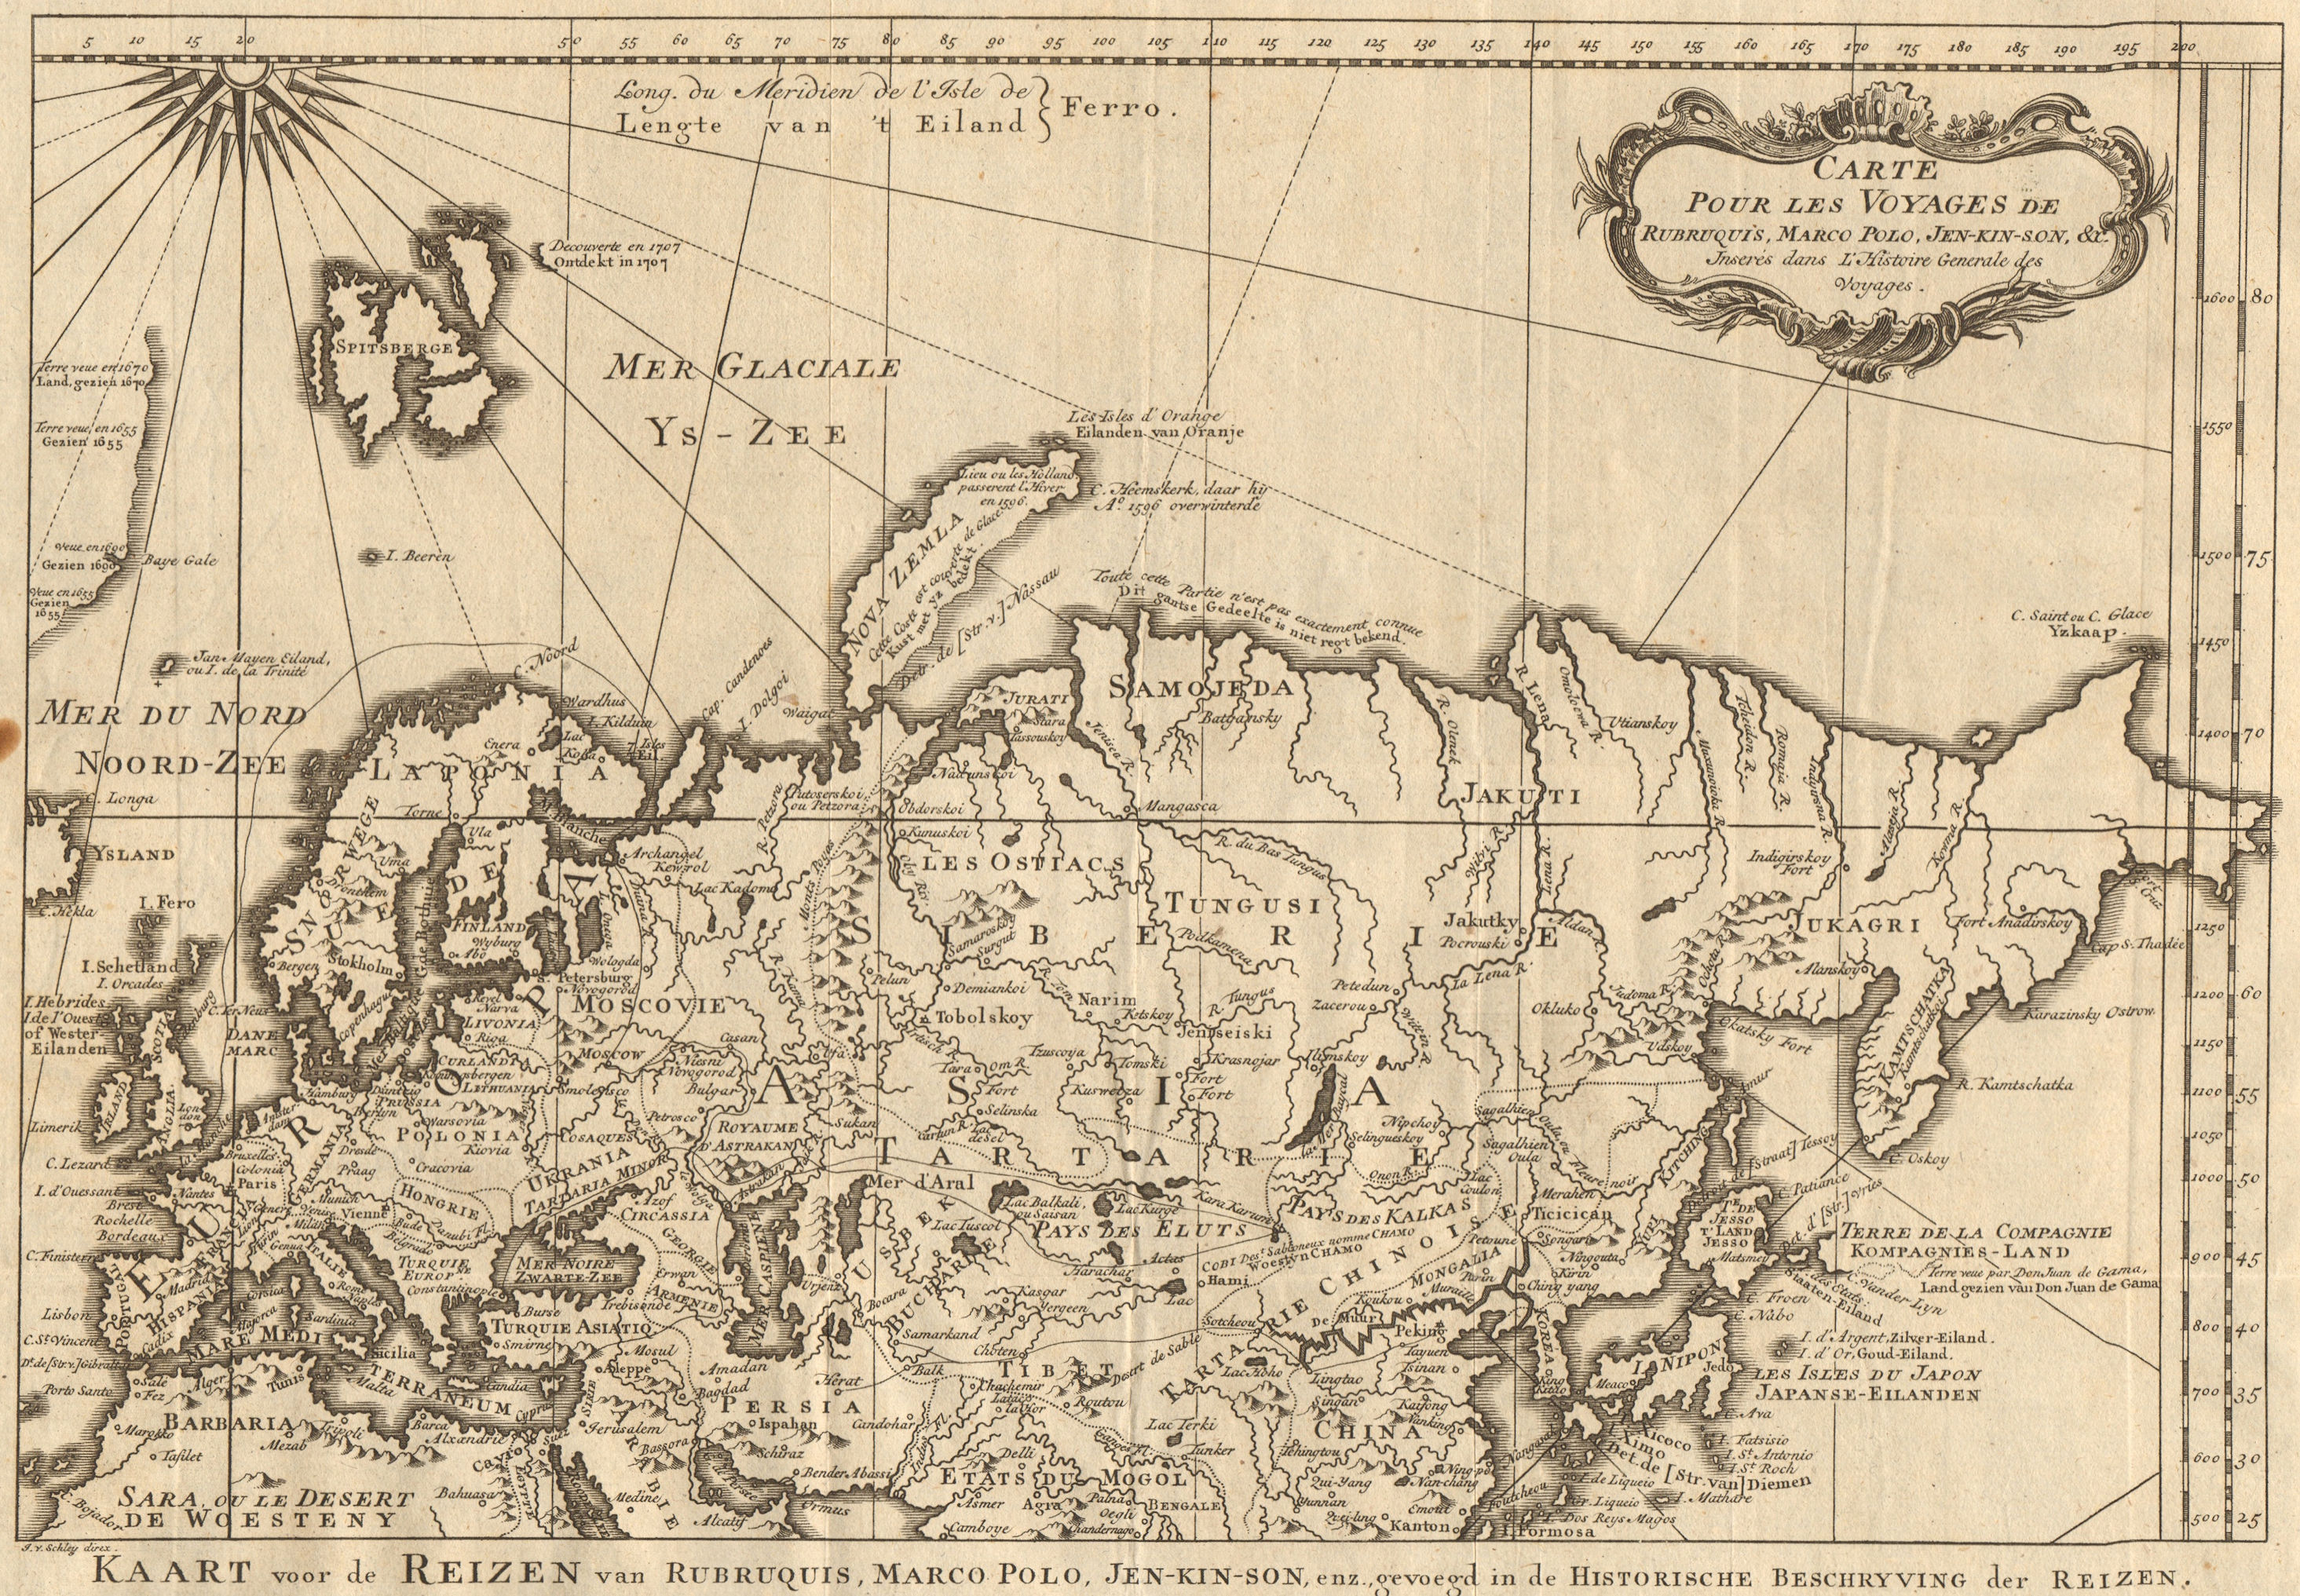 Associate Product 'Les voyages de Rubruquis, Marco Polo, Jenkinson'. BELLIN/SCHLEY 1749 old map